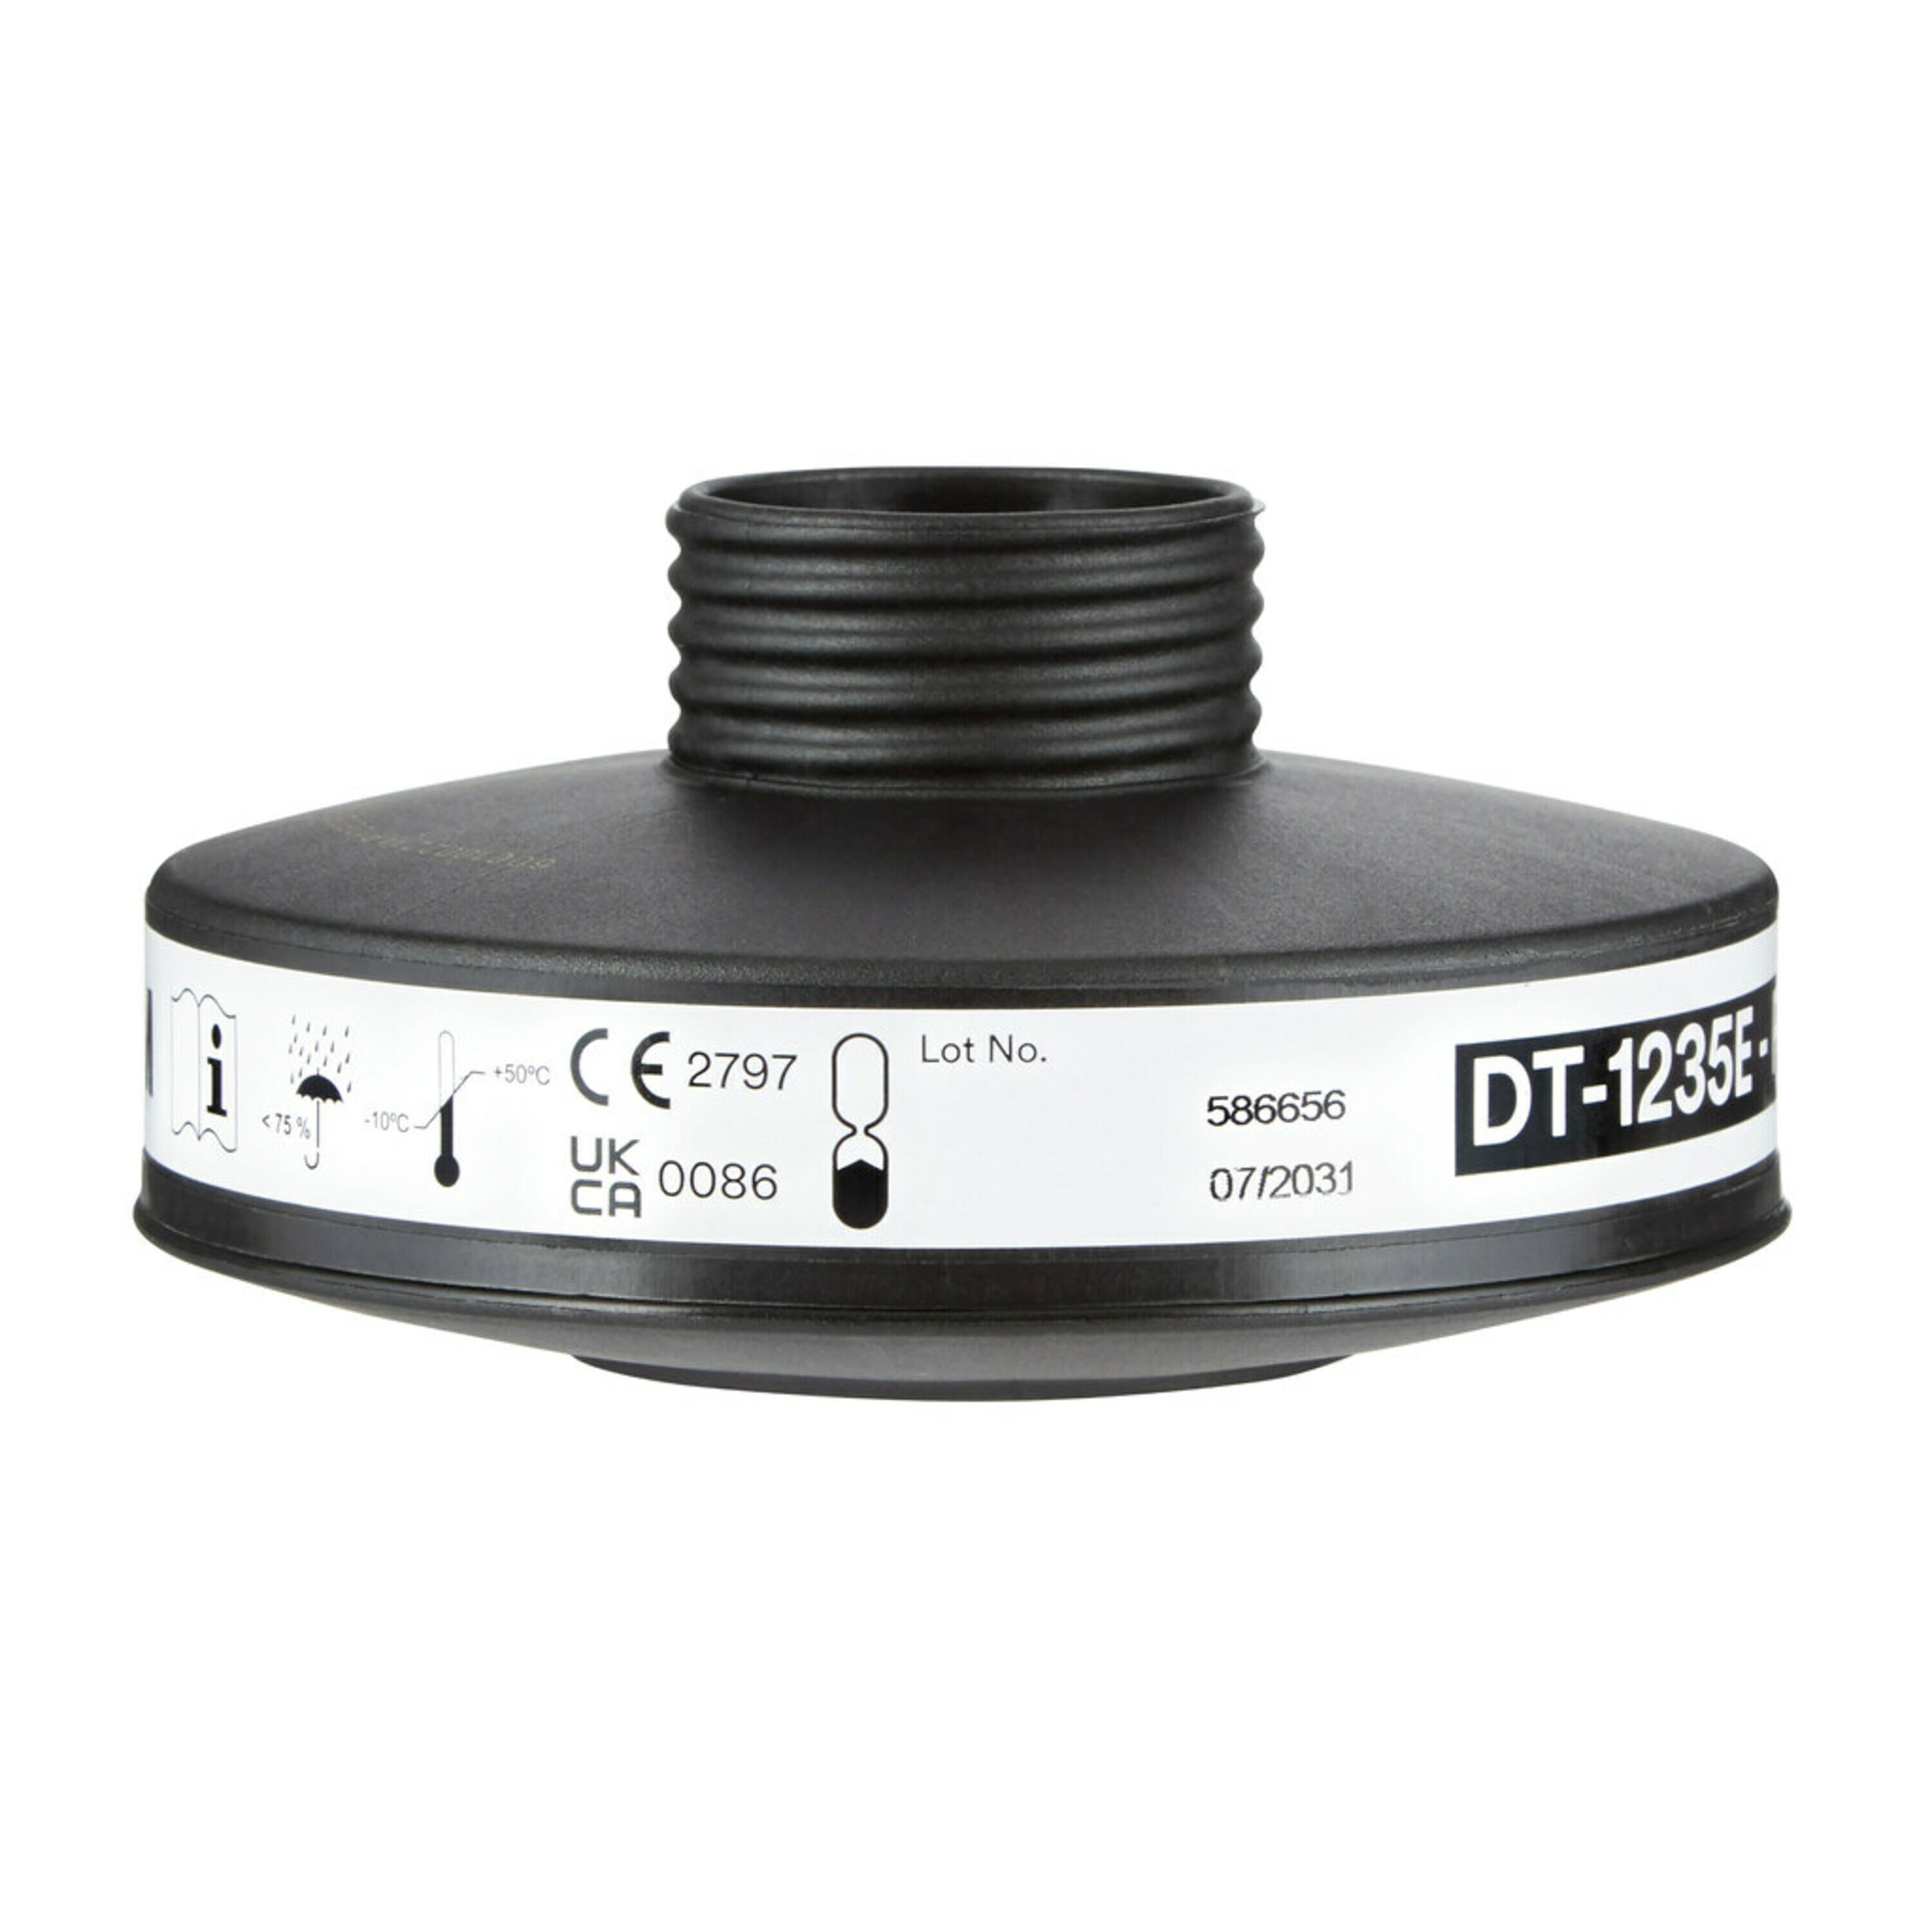 3M Particle filter, PFR 10 P3 DT-1235E